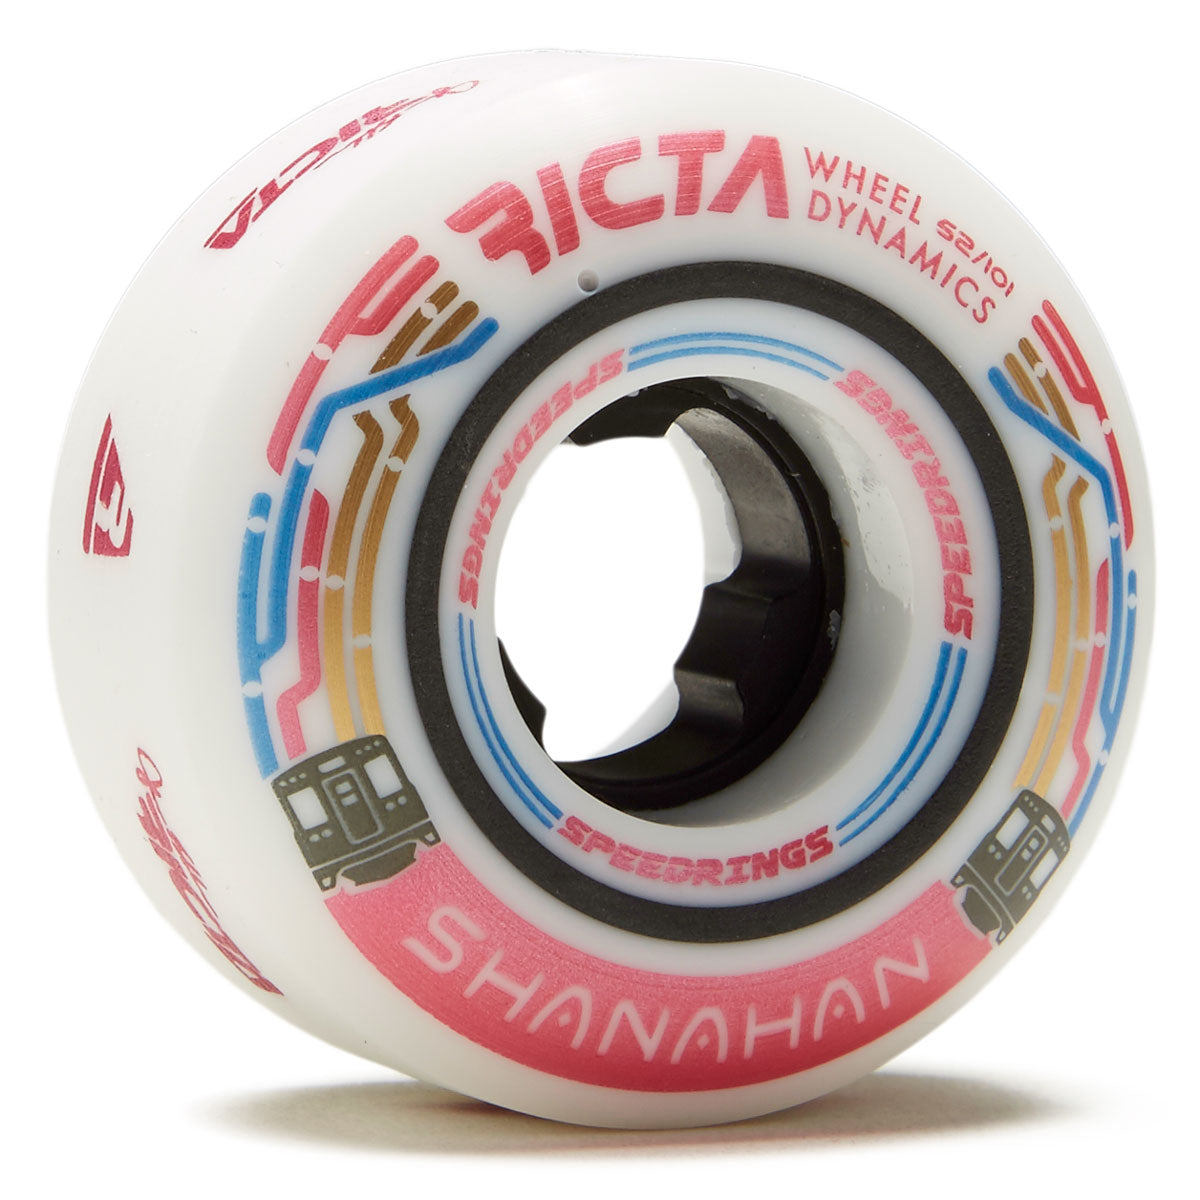 Ricta Shanahan Speedrings Slim 101a Skateboard Wheels - White - 52mm image 1